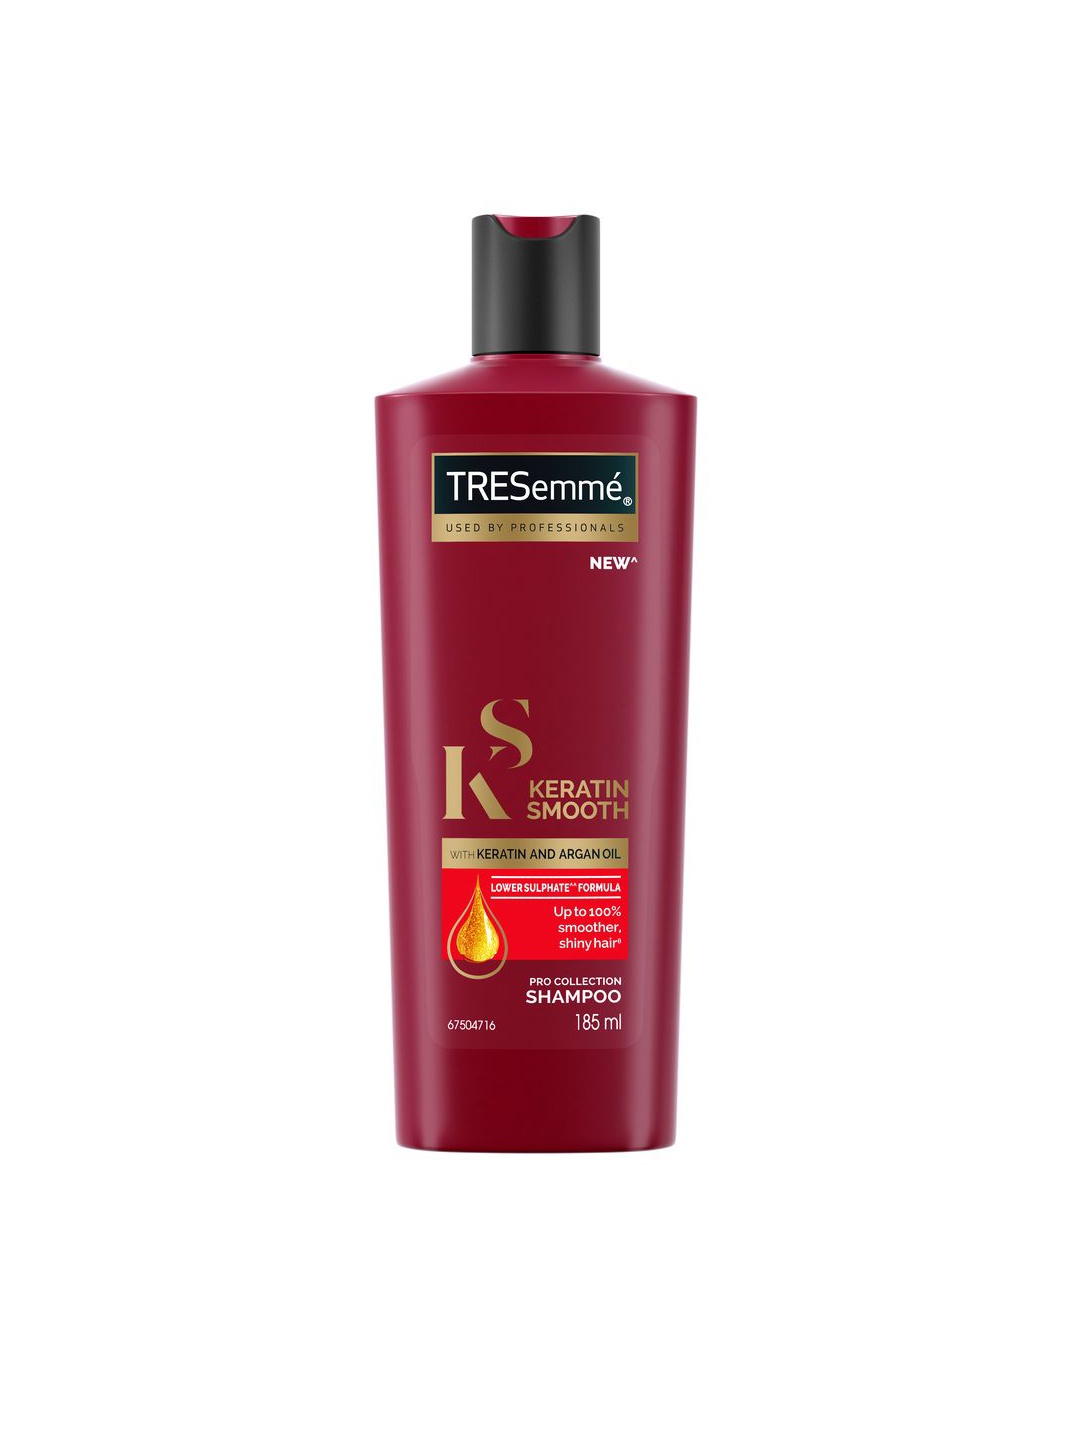 

TRESemme Keratin Smooth Shampoo with Keratin & Argan Oil for Straight Hair-185 ml, Maroon